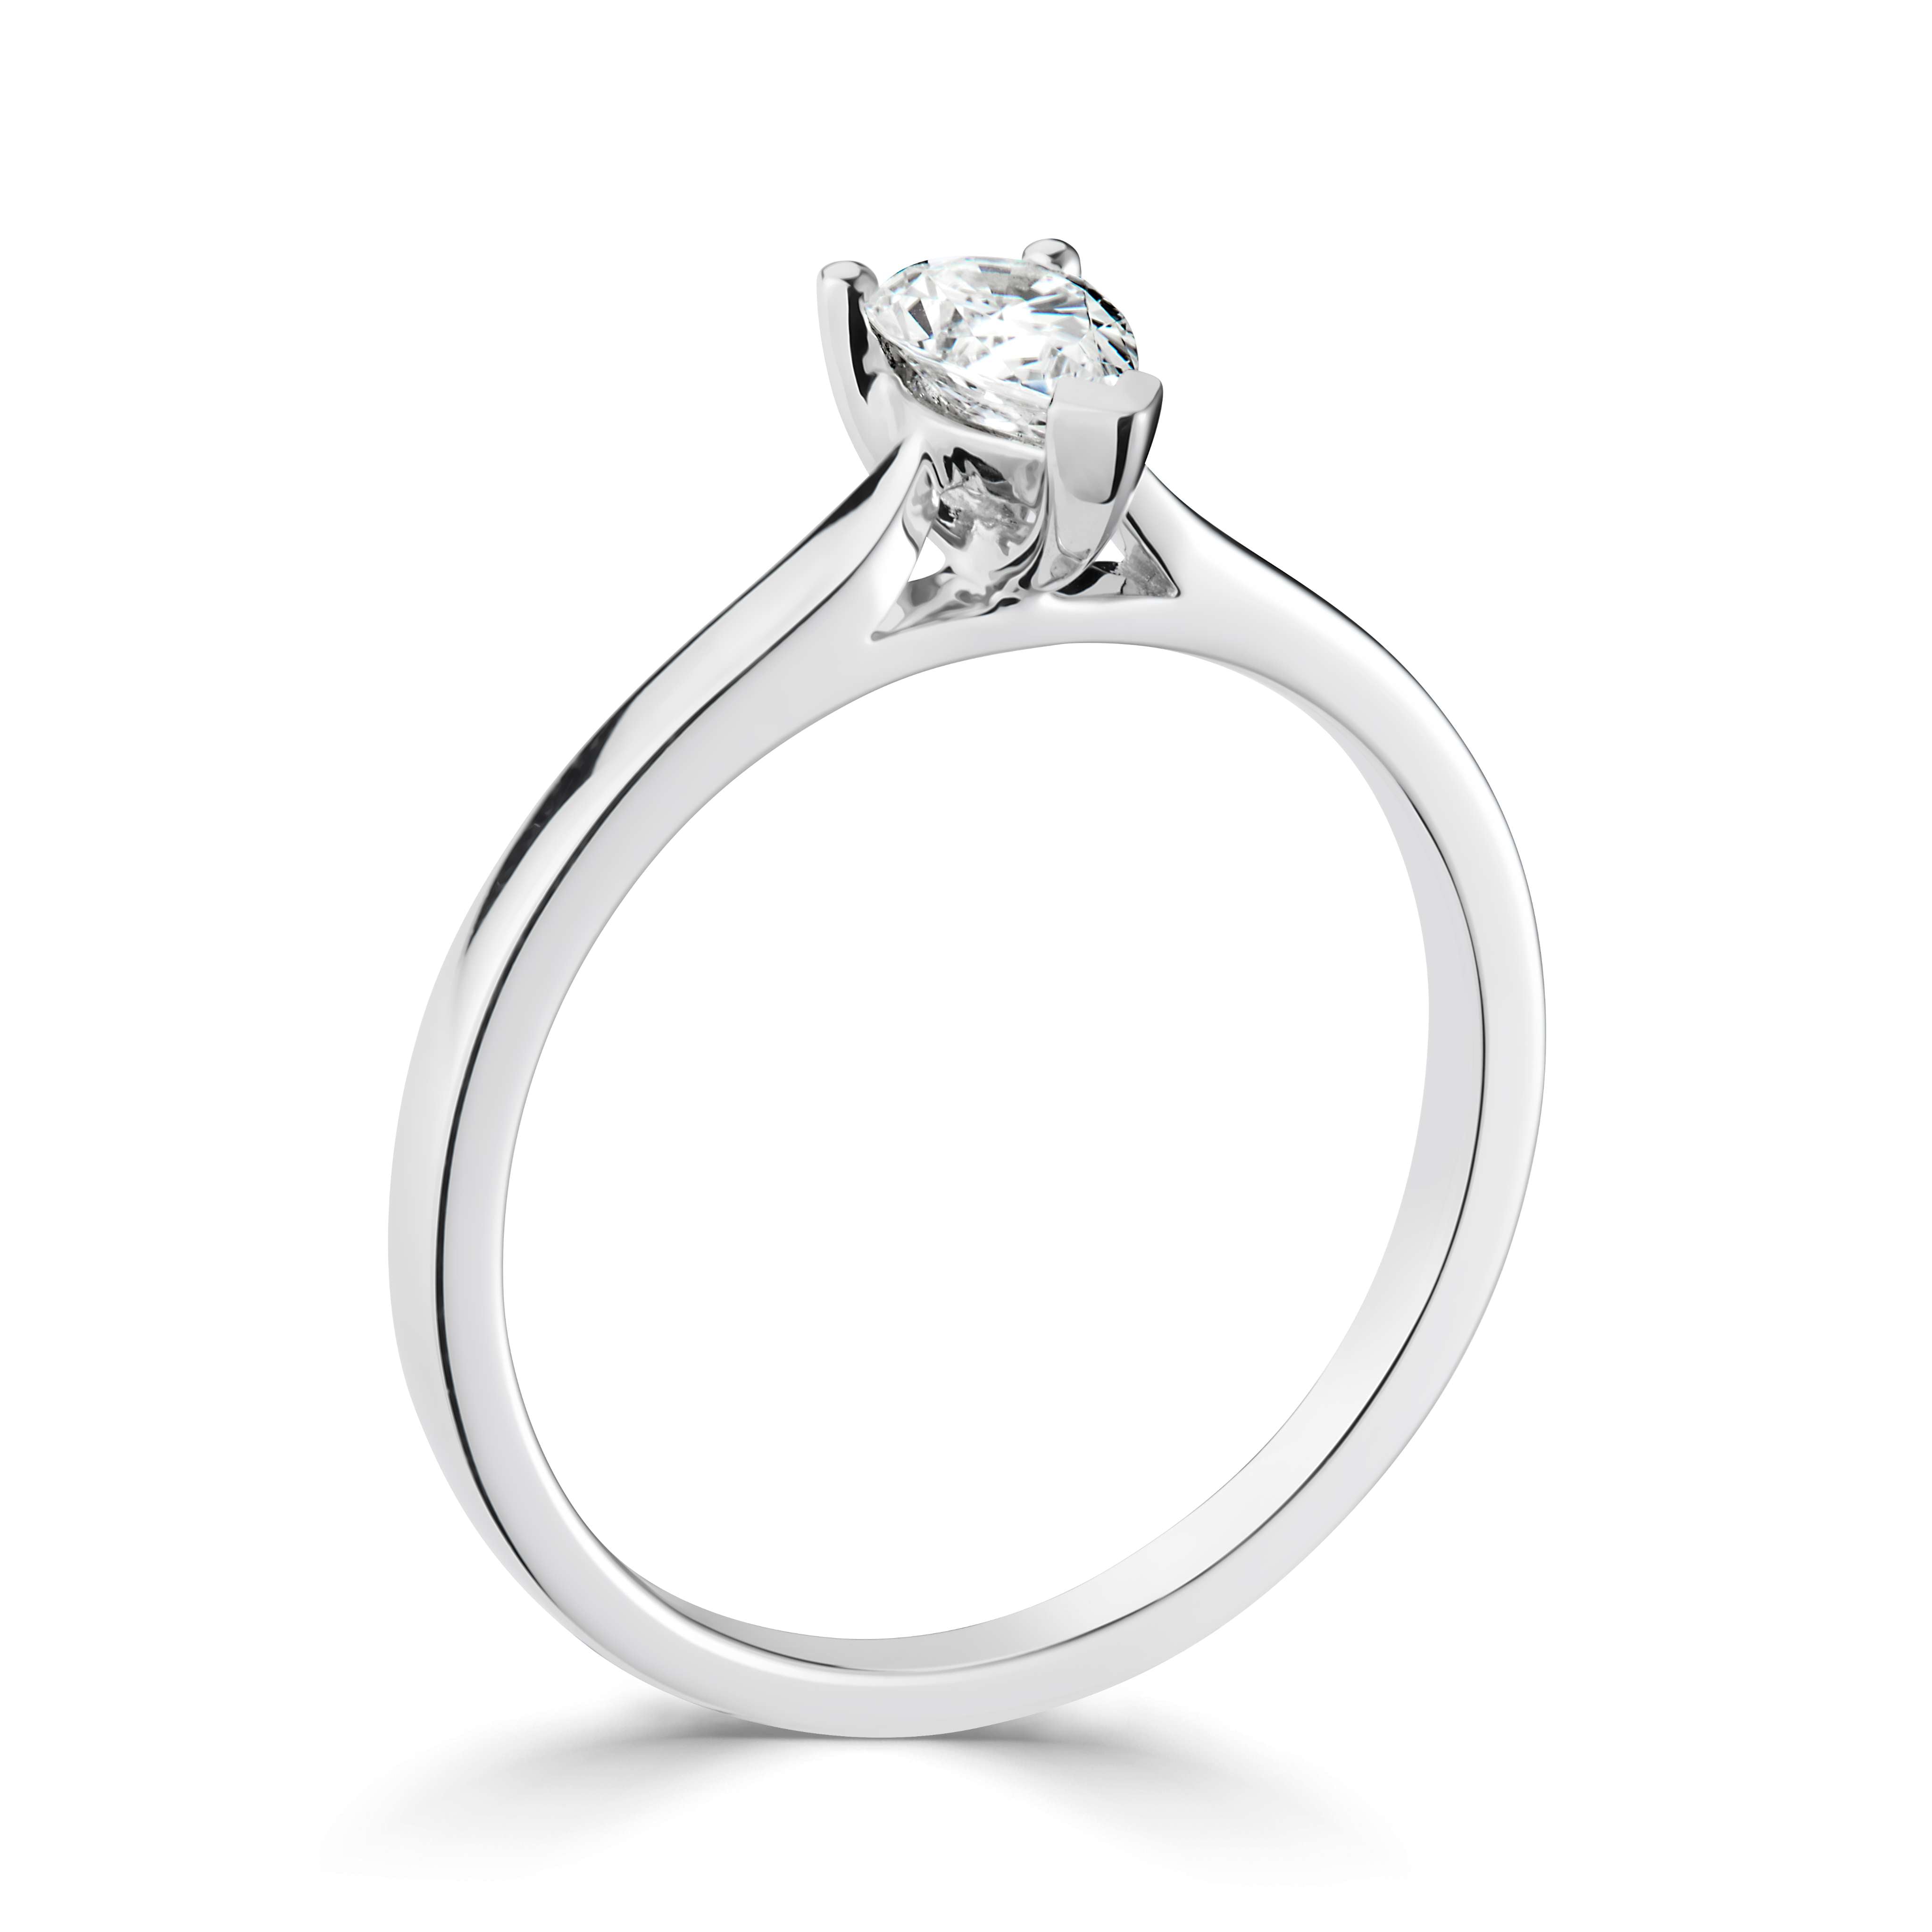 Gia *Select a Pear Shape Diamond 0.33ct or above